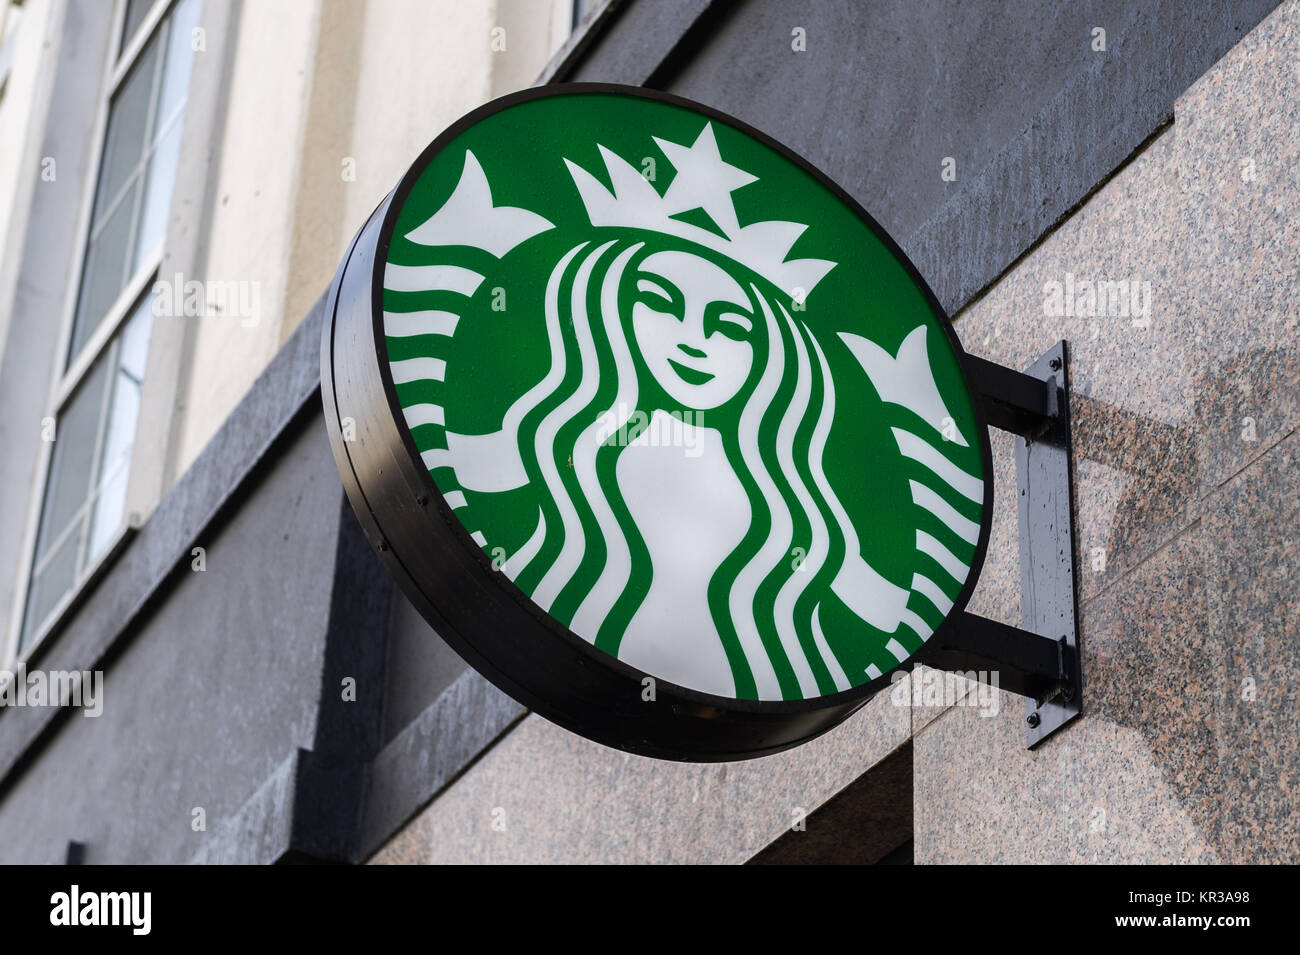 Starbucks logo sign on a building in Cork, Ireland. Stock Photo